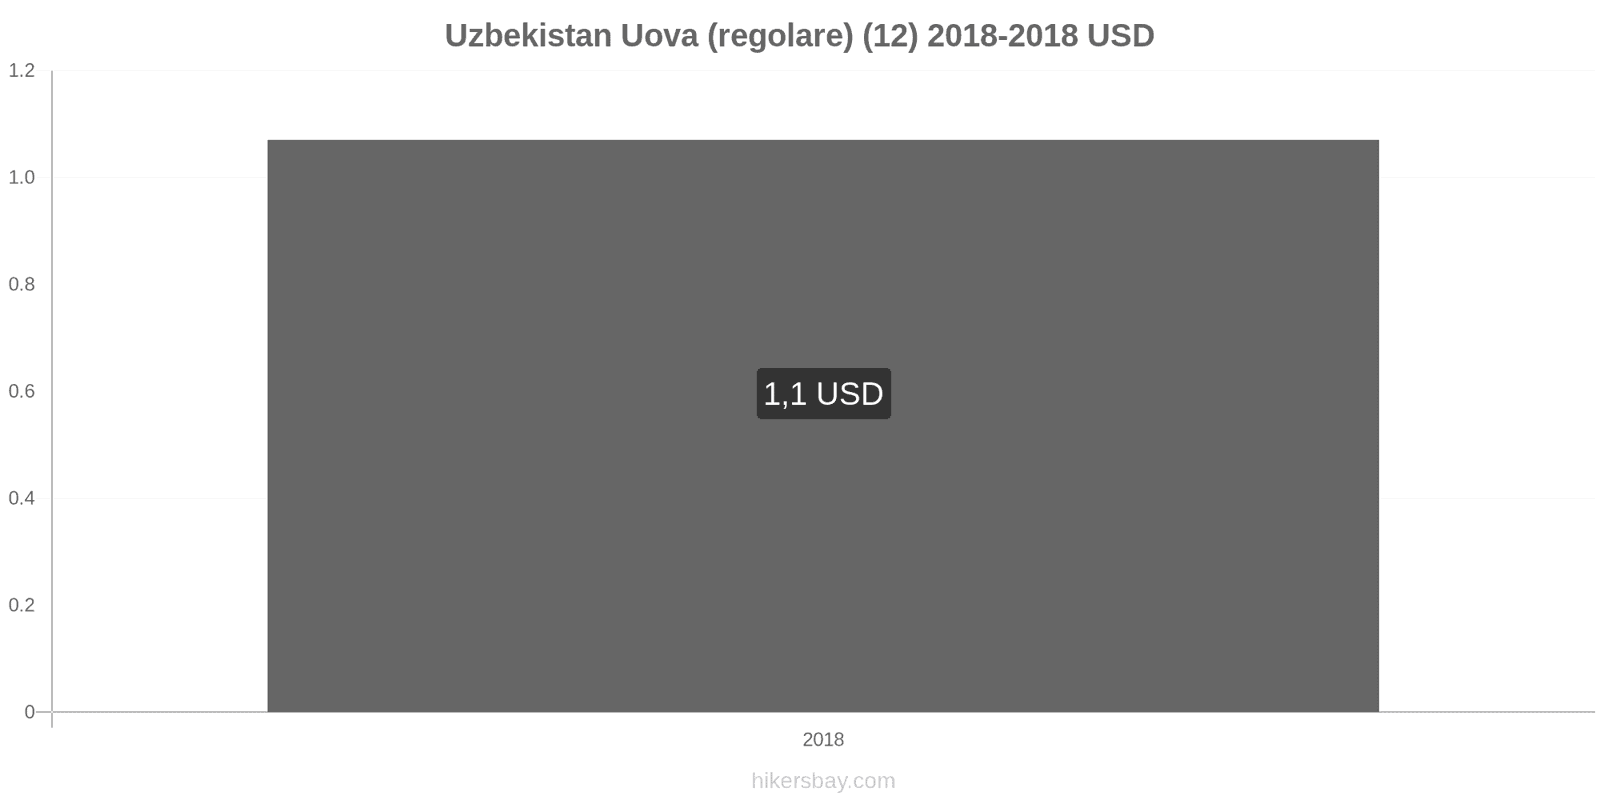 Uzbekistan cambi di prezzo Uova (normali) (12) hikersbay.com